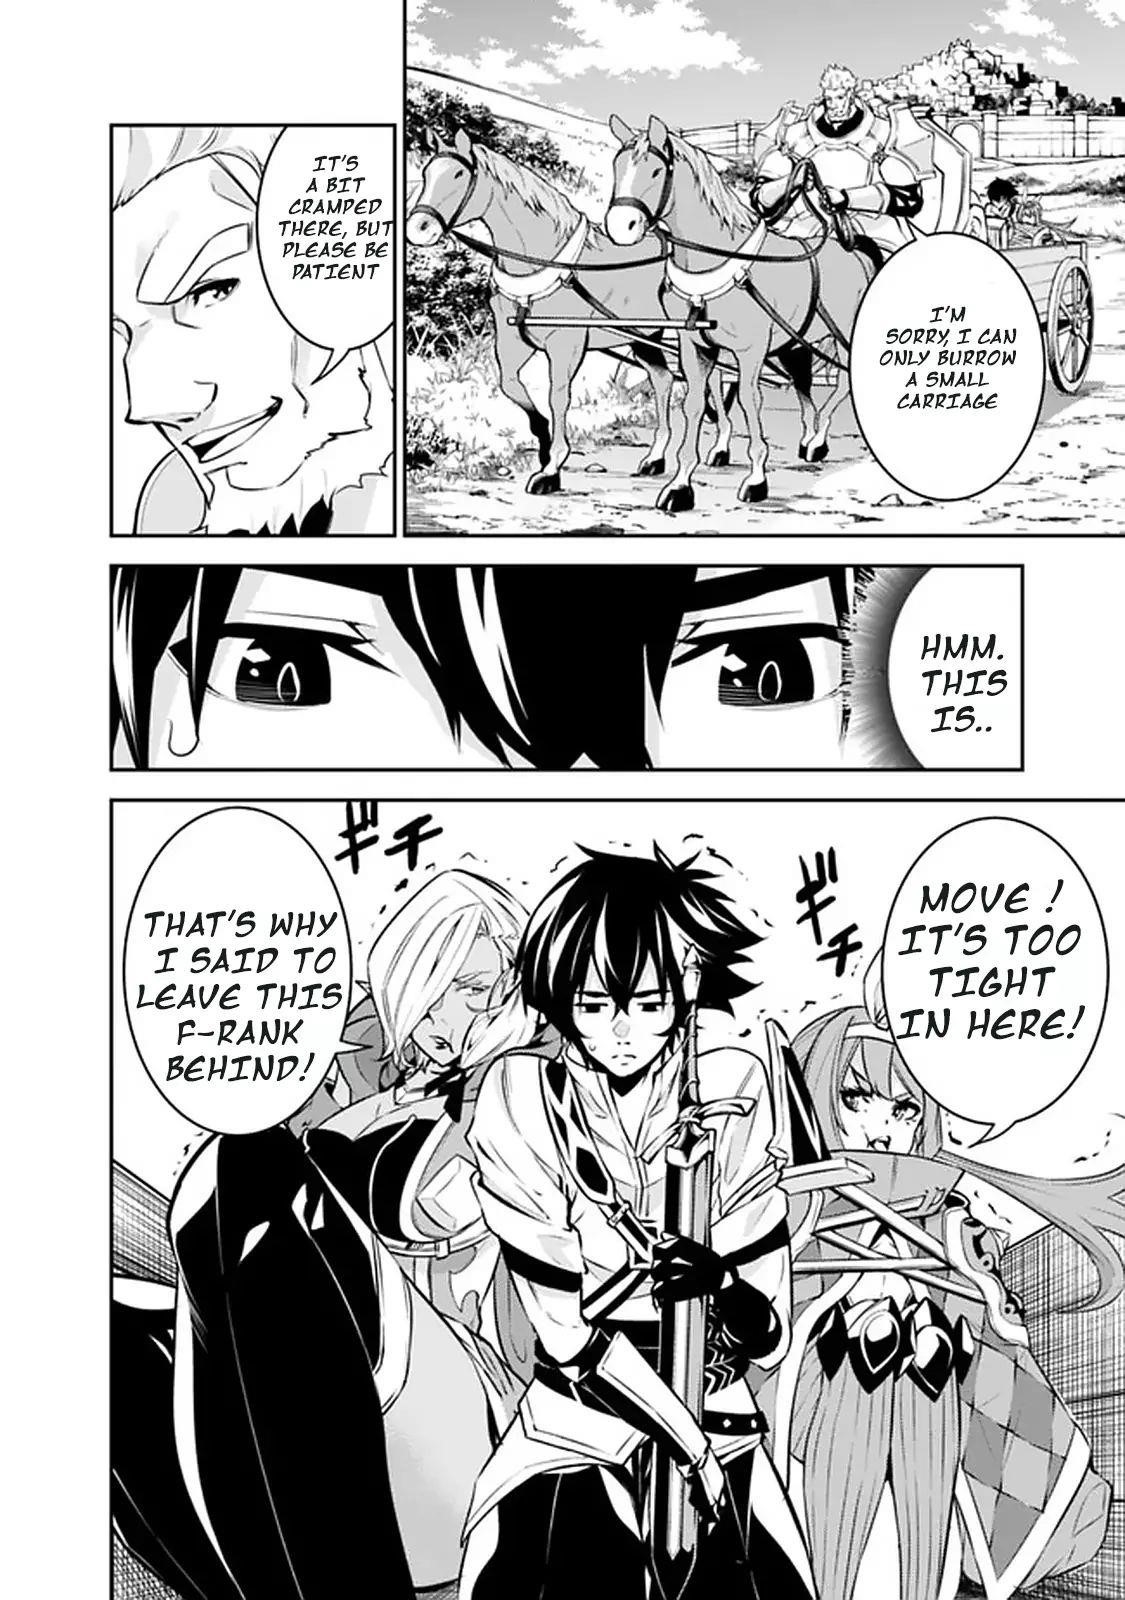 Read Manga The Strongest Magical Swordsman Ever Reborn As An F-Rank ...